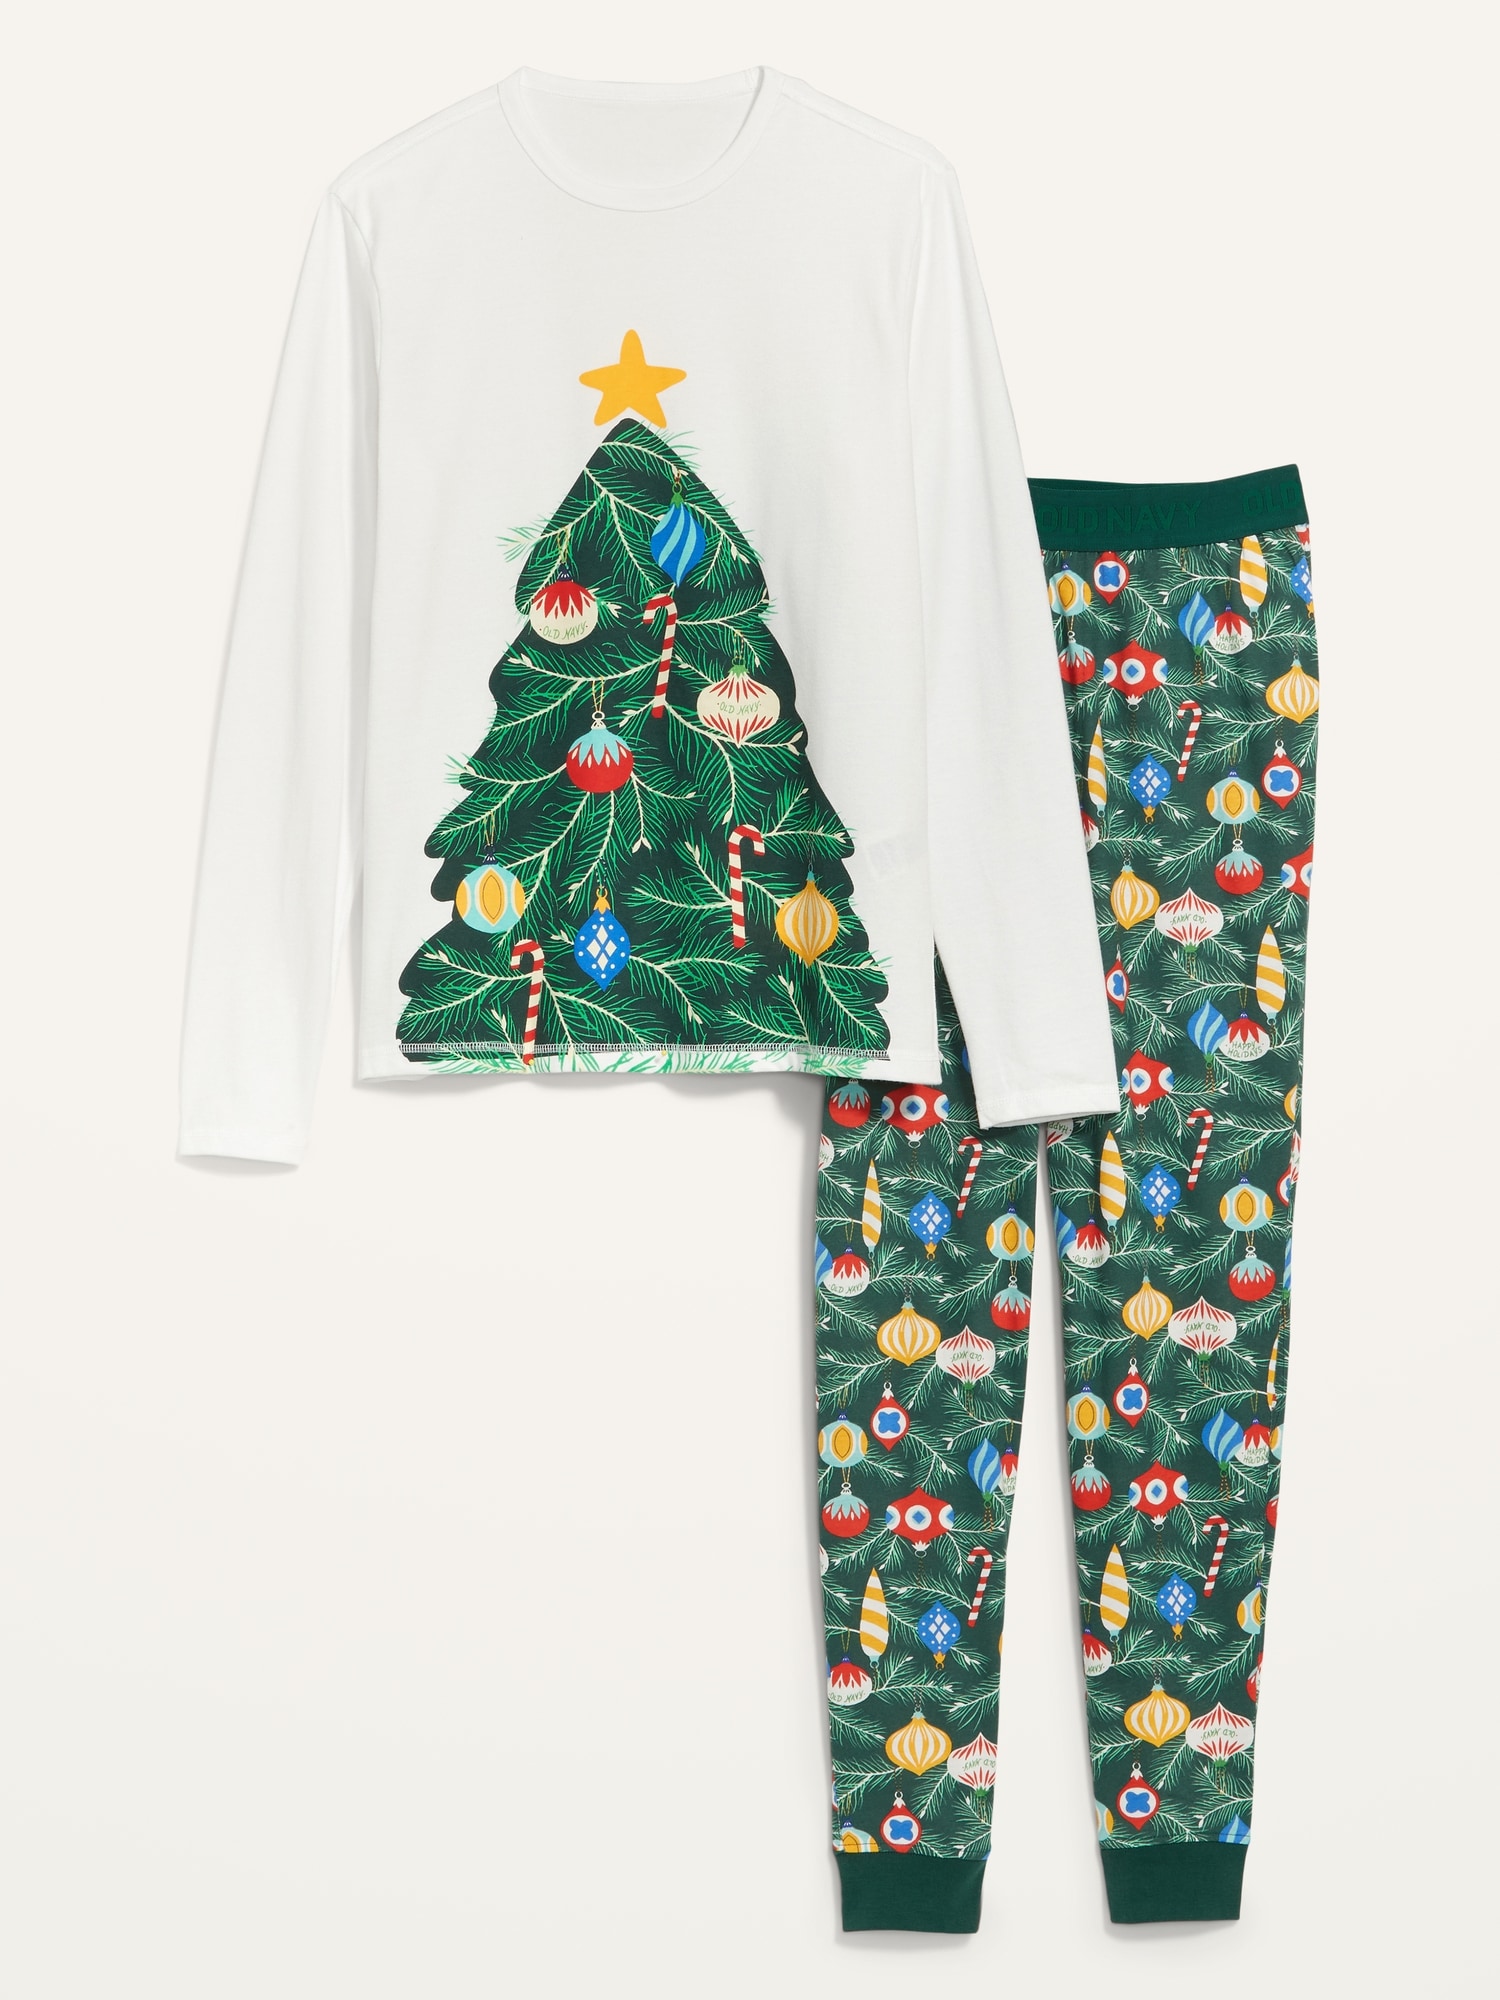 Matching Holiday Costume Graphic Pajama Set for Men